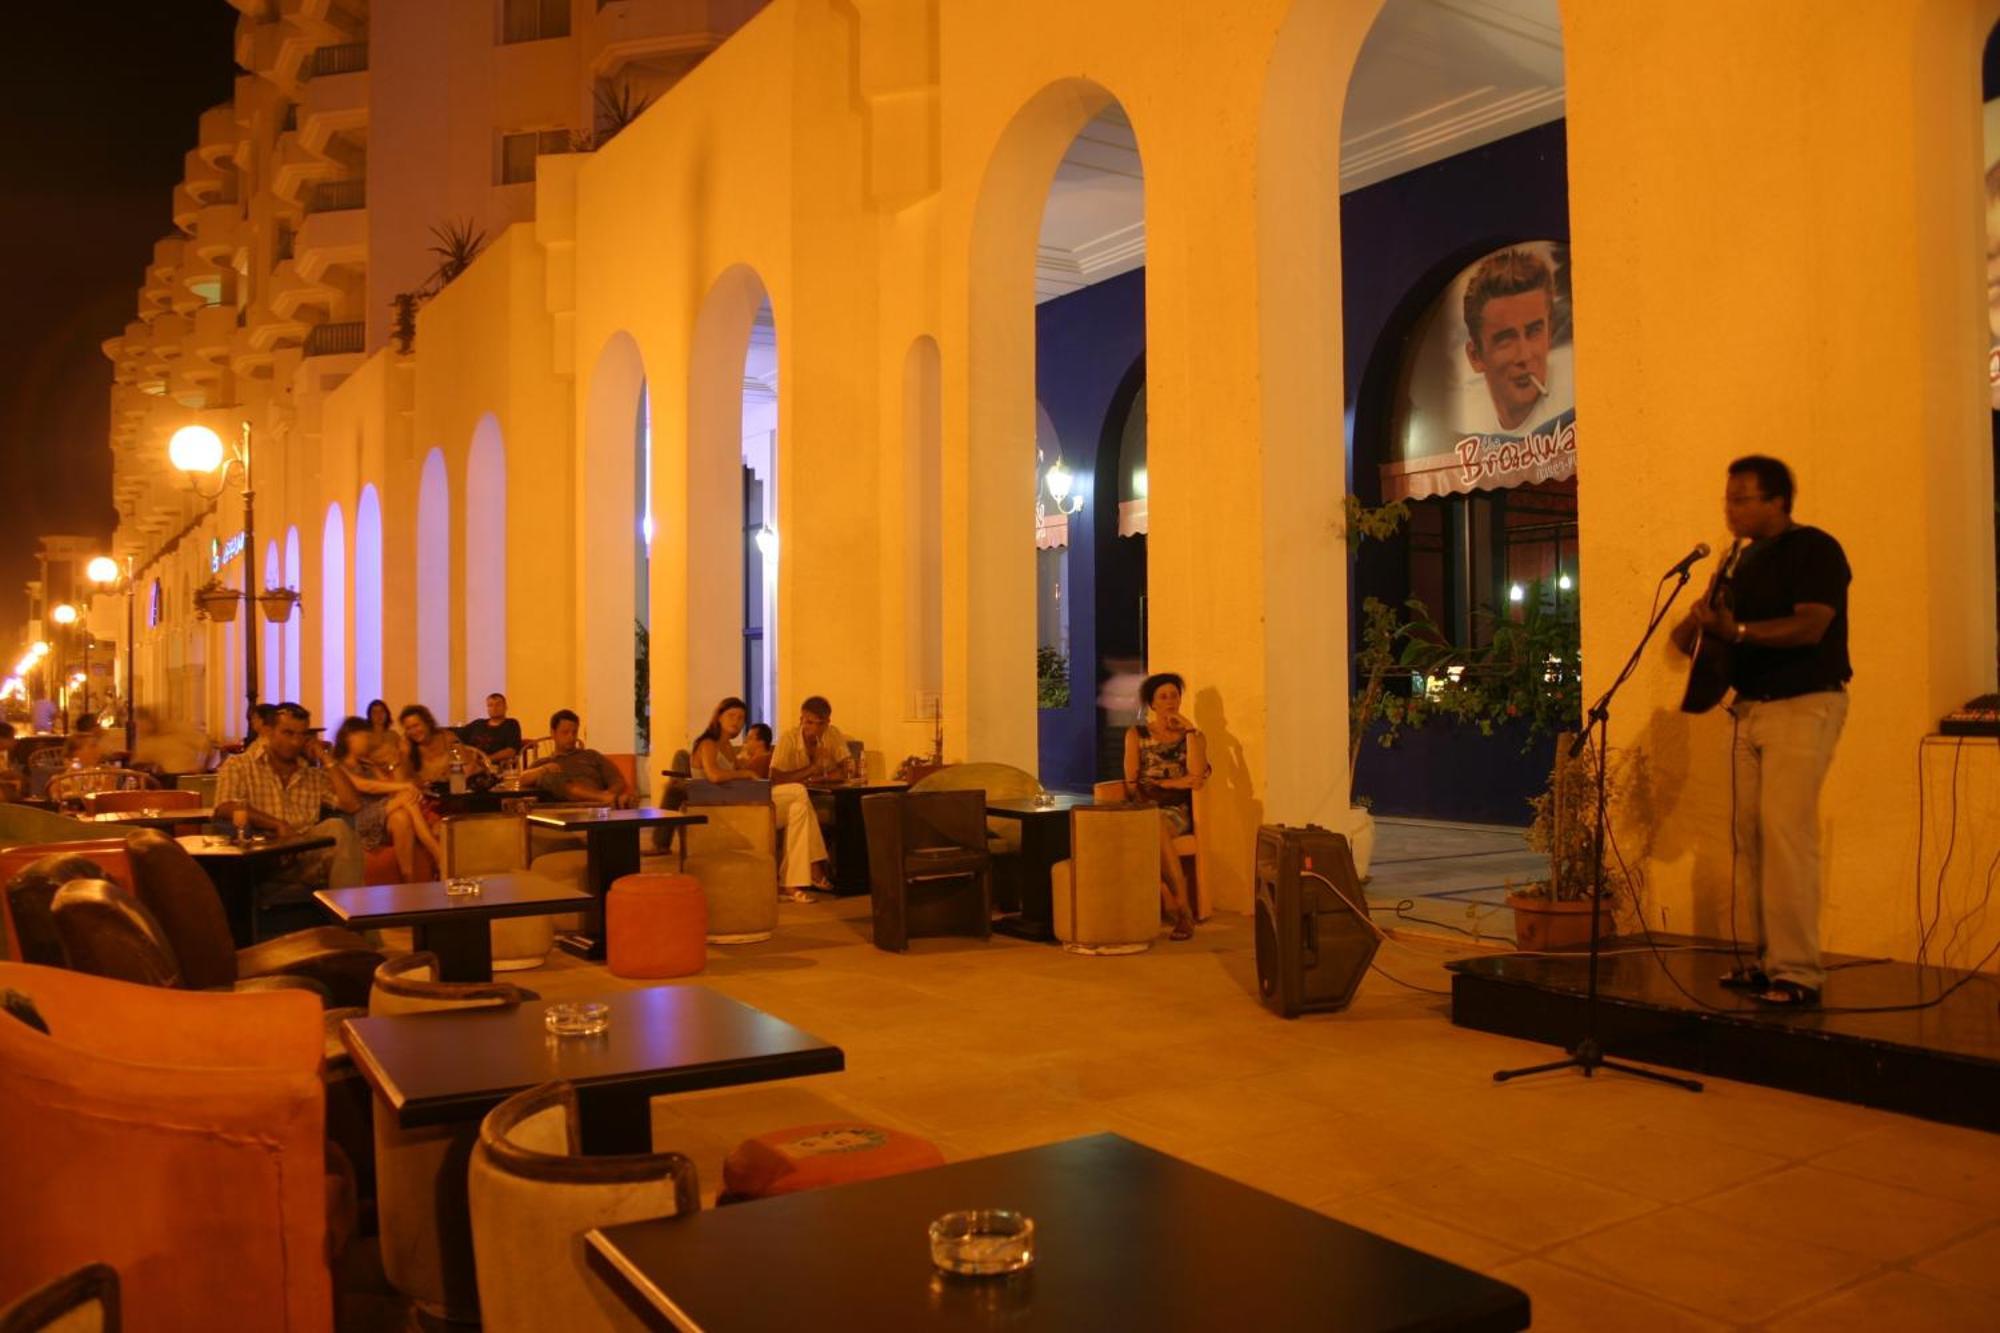 El Mouradi Hammamet Hotel Exterior photo